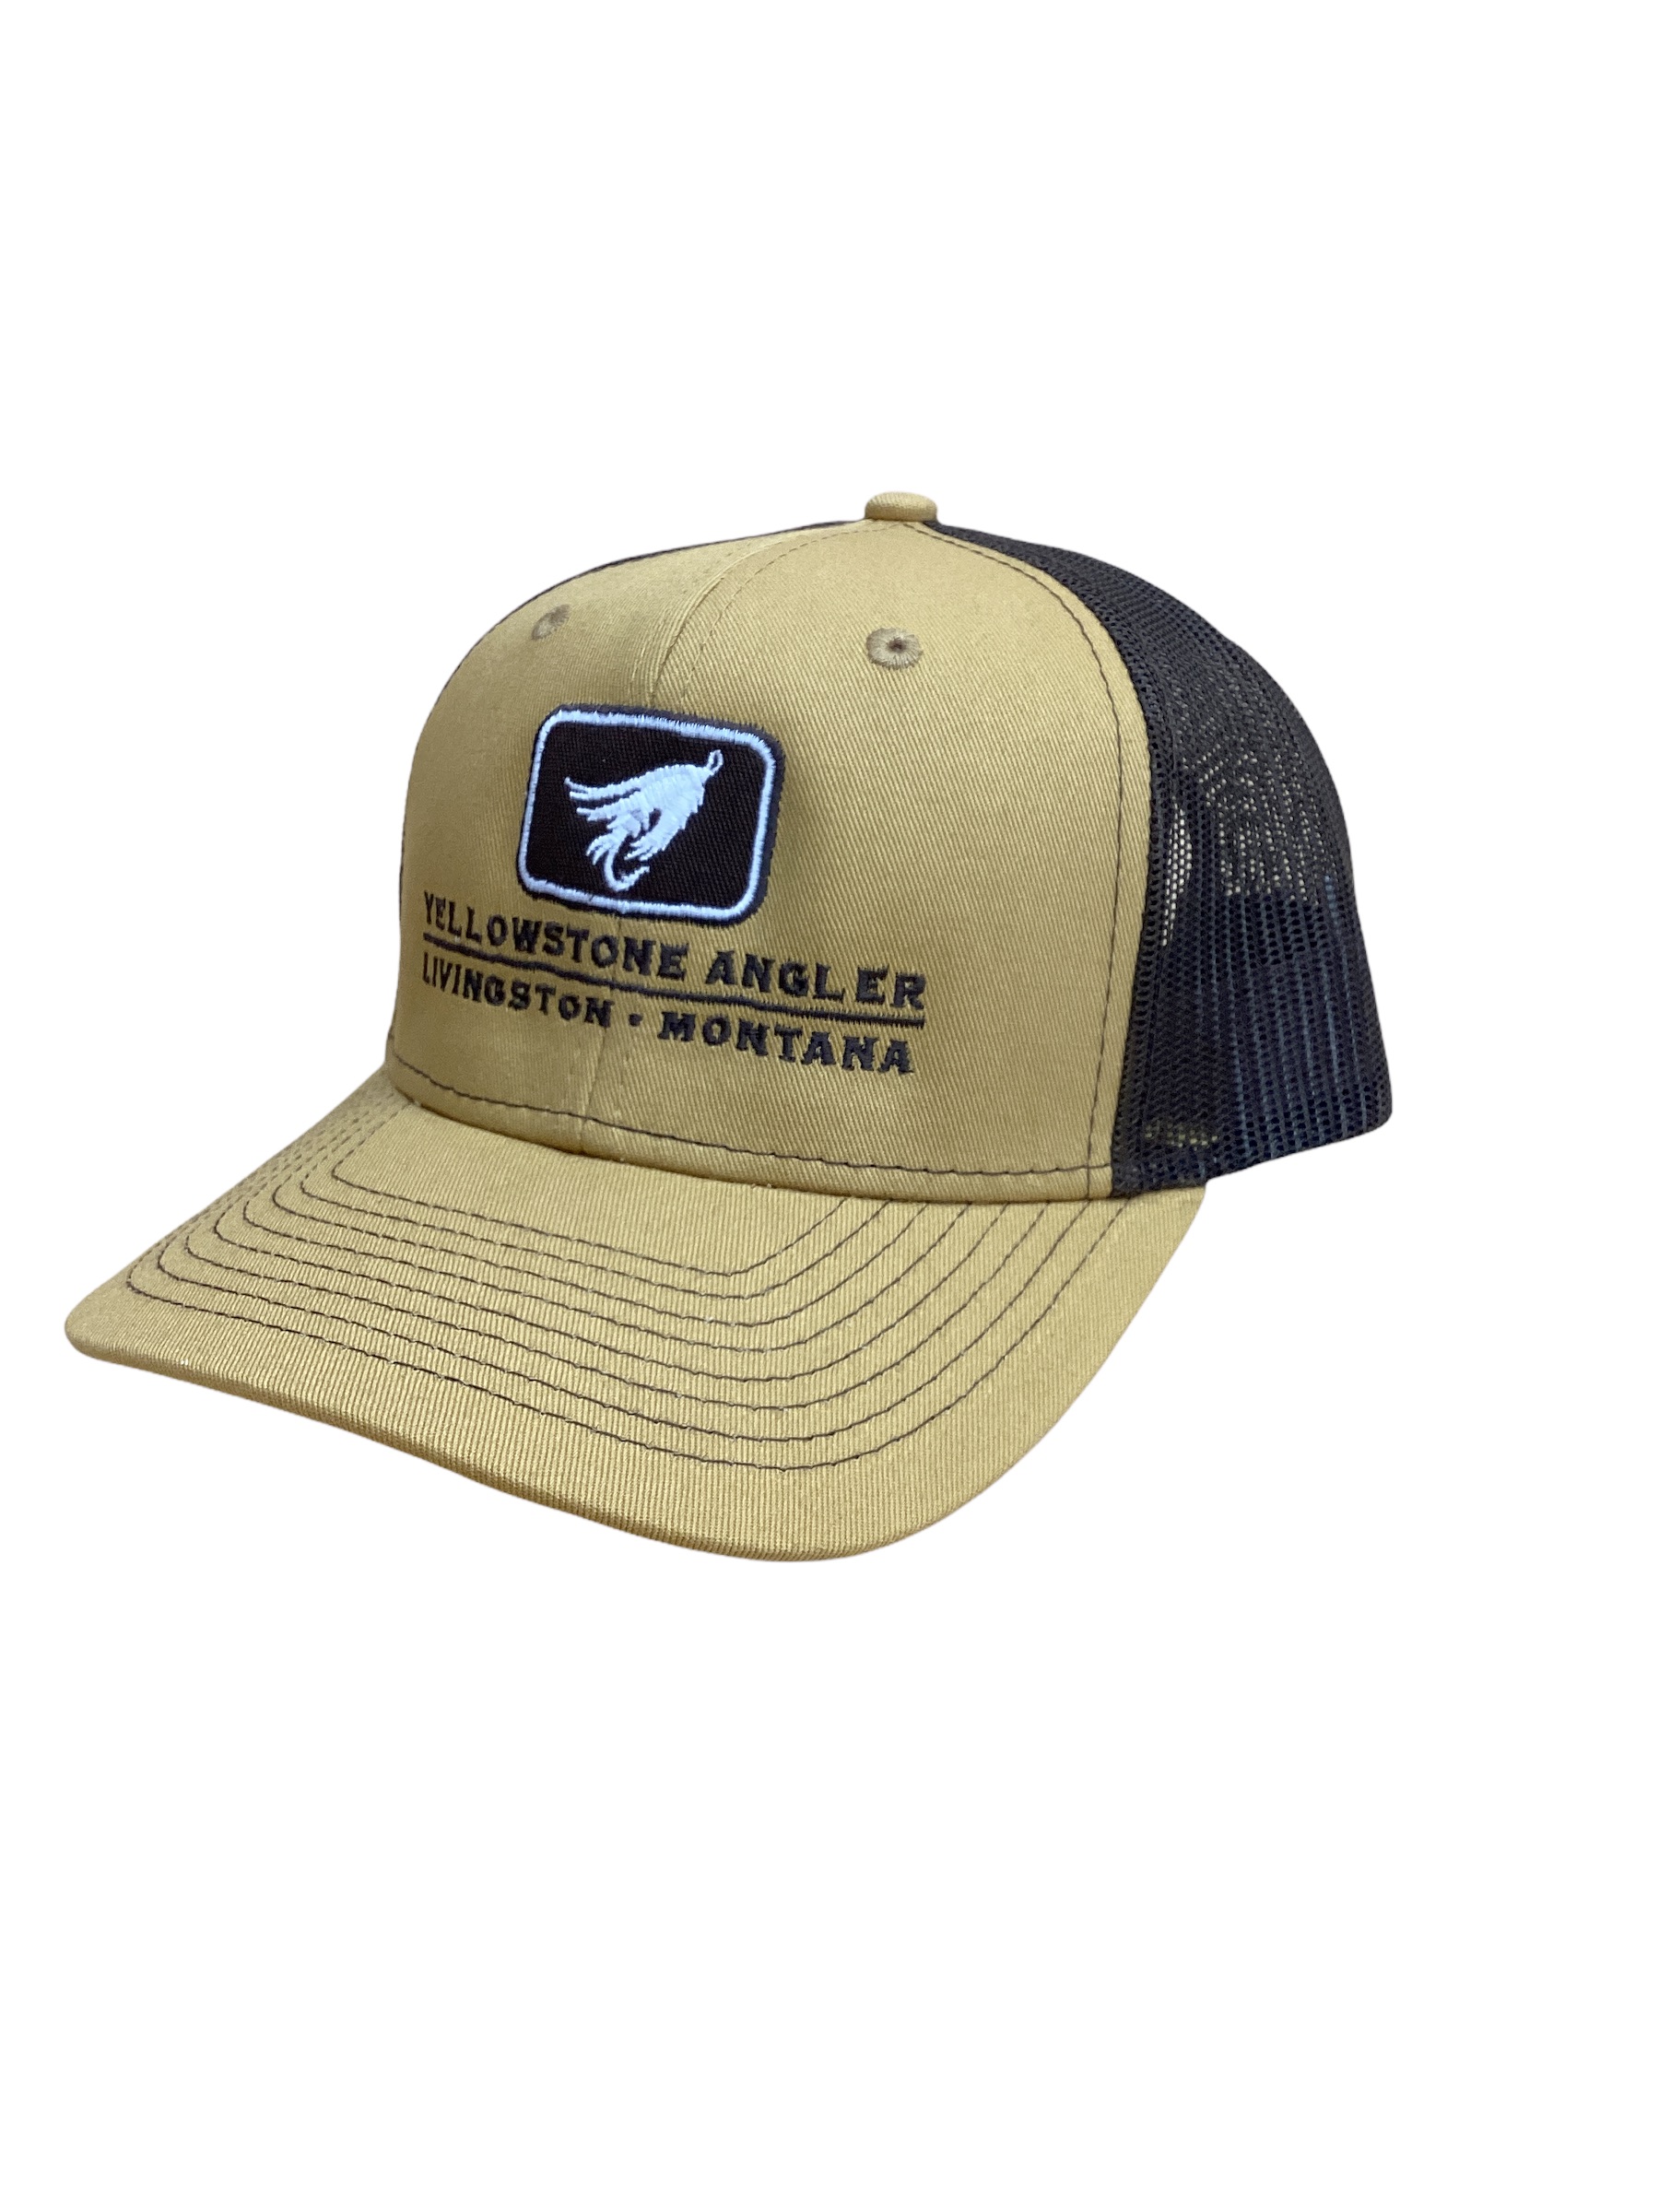 Fly Fishing Hat, Fishing Trucker Hat Snapback Cap, Trout Fisherman